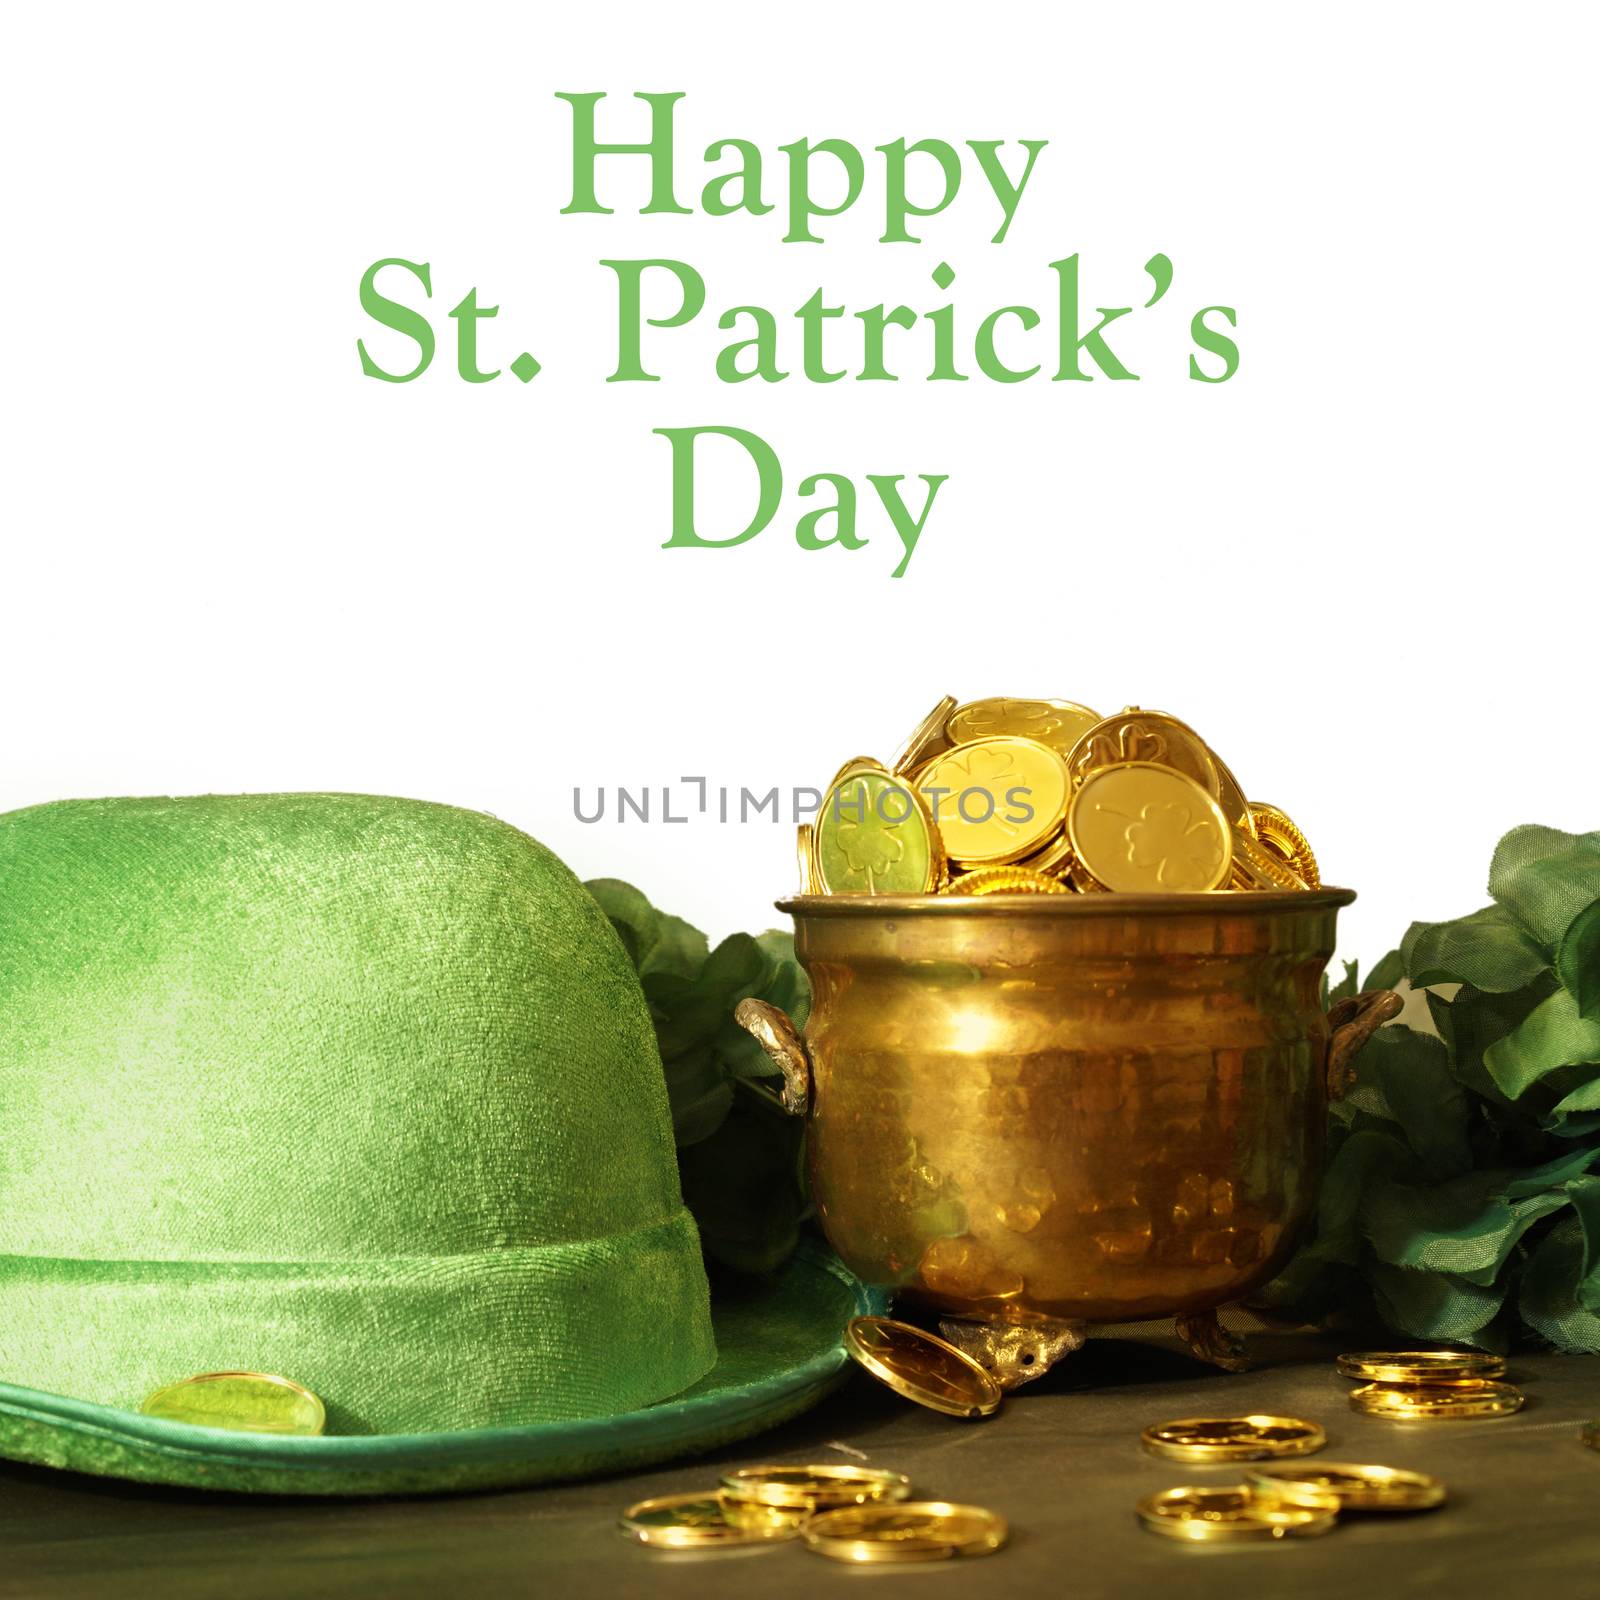 Saint Patricks day hat and pot of gold for the festive Irish celebrations.